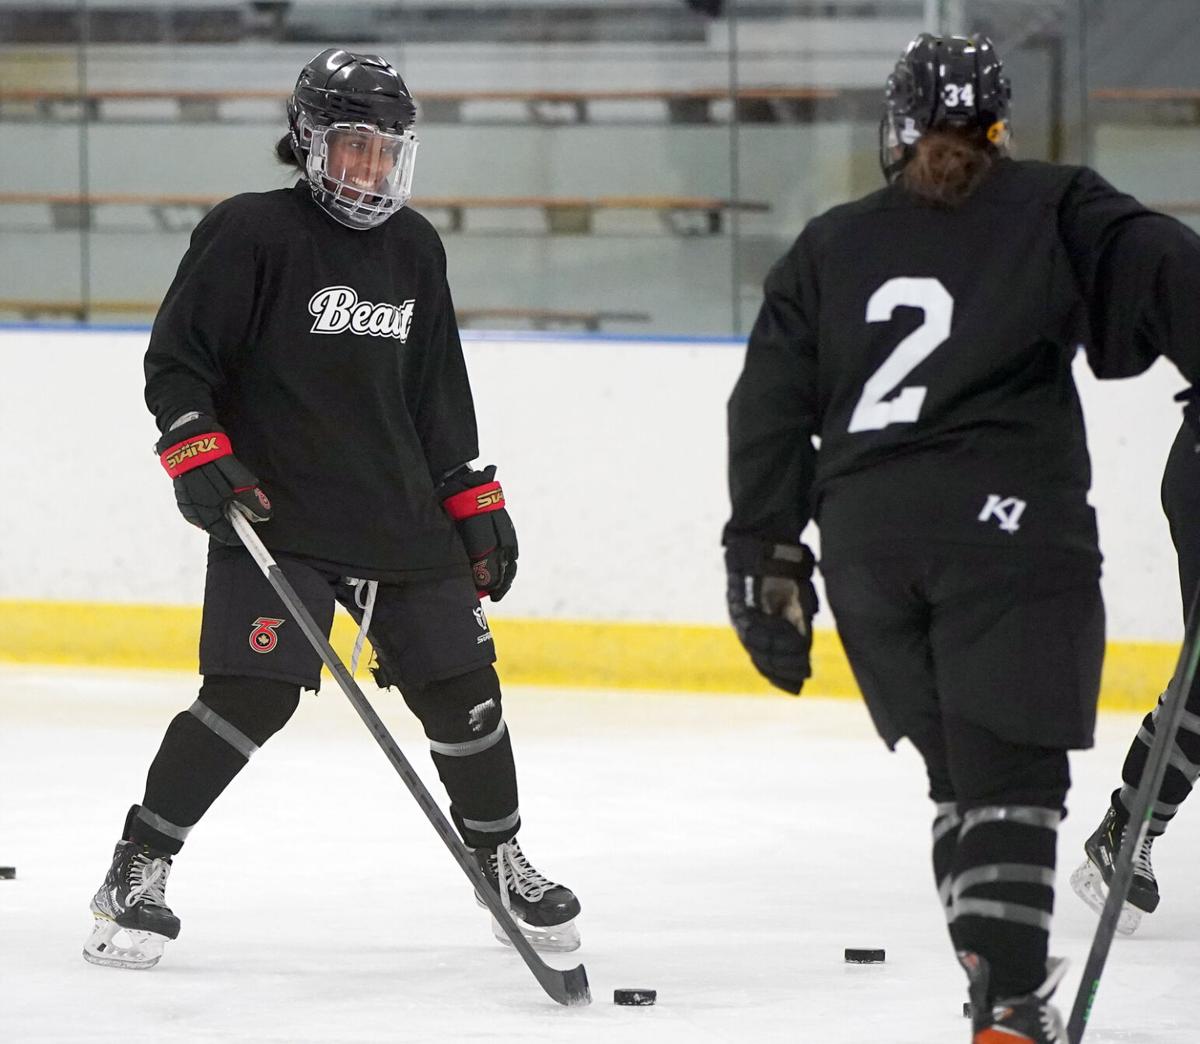 Mikyla Grant-Mentis' record deal: Women's hockey players respond - JWS